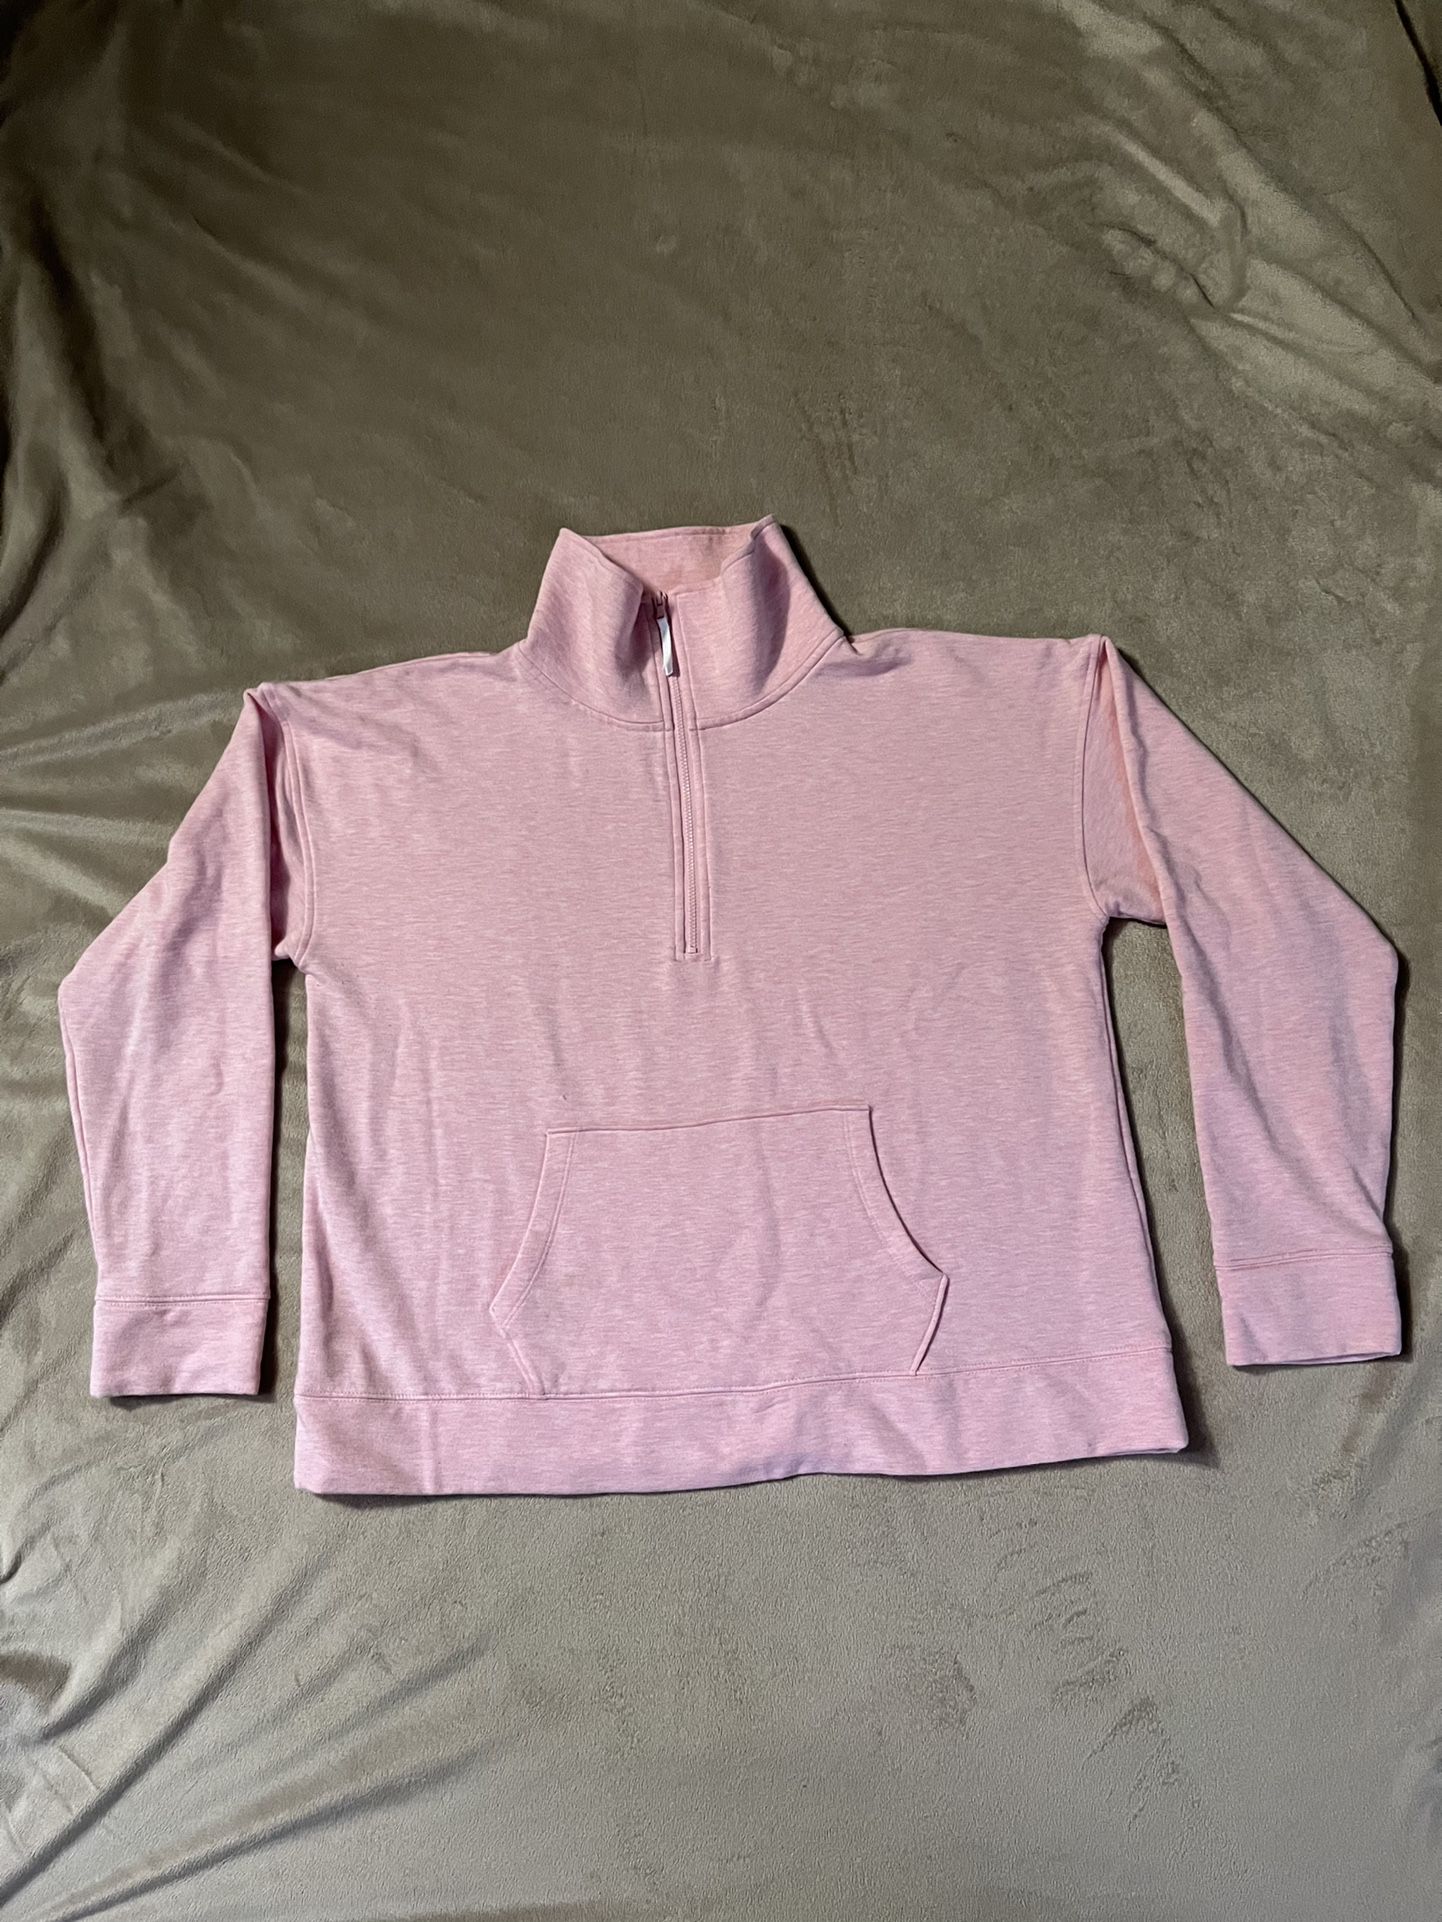 Like New Vineyard Vines Ladies Pink & Slightly Cropped Quarter-Zip Sweatshirt, Size Medium.